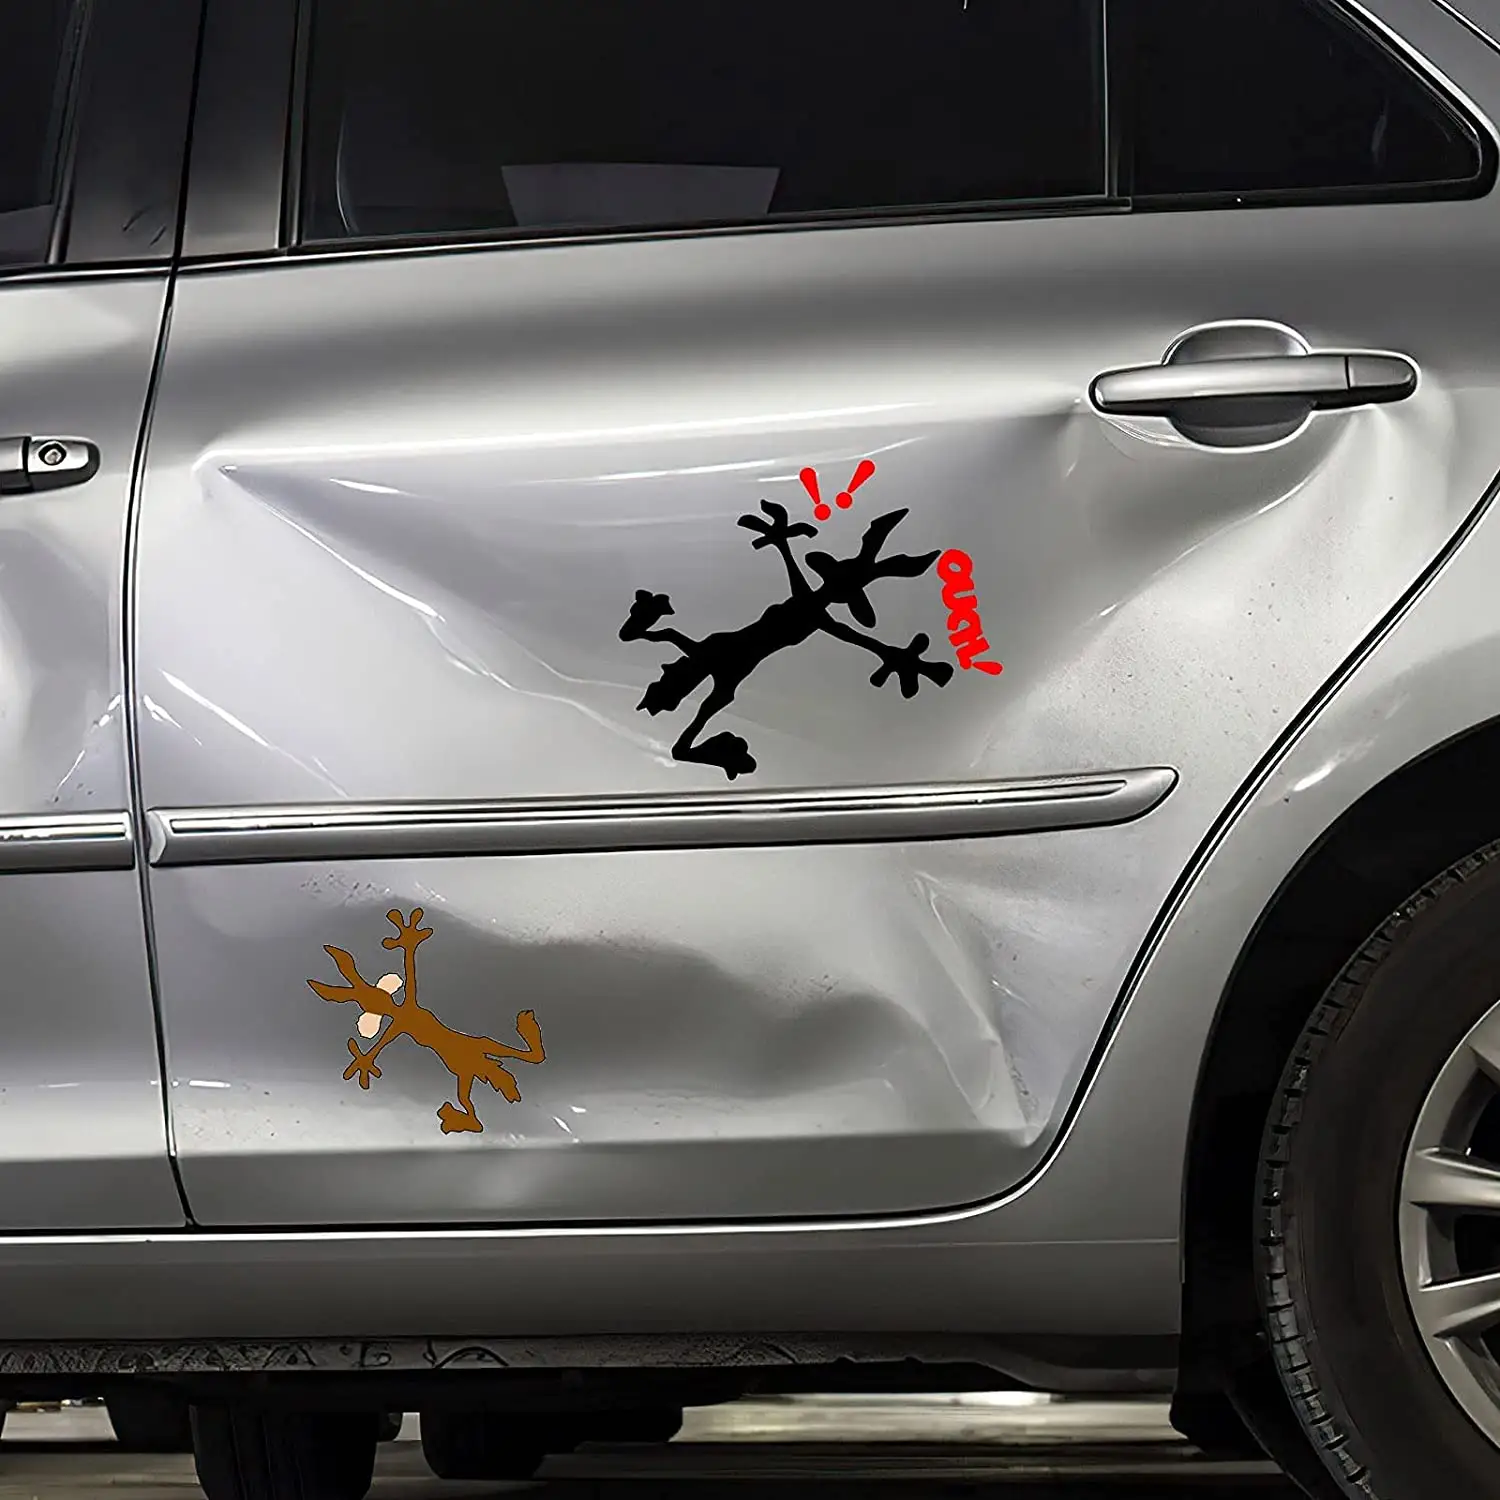 Funny Vinyl Dent Fix Car Decal, E Cartoon Coyote Splat Hitting Wall Door Cars Laptop Truck Bumper Window Decal Bandaid Sticker